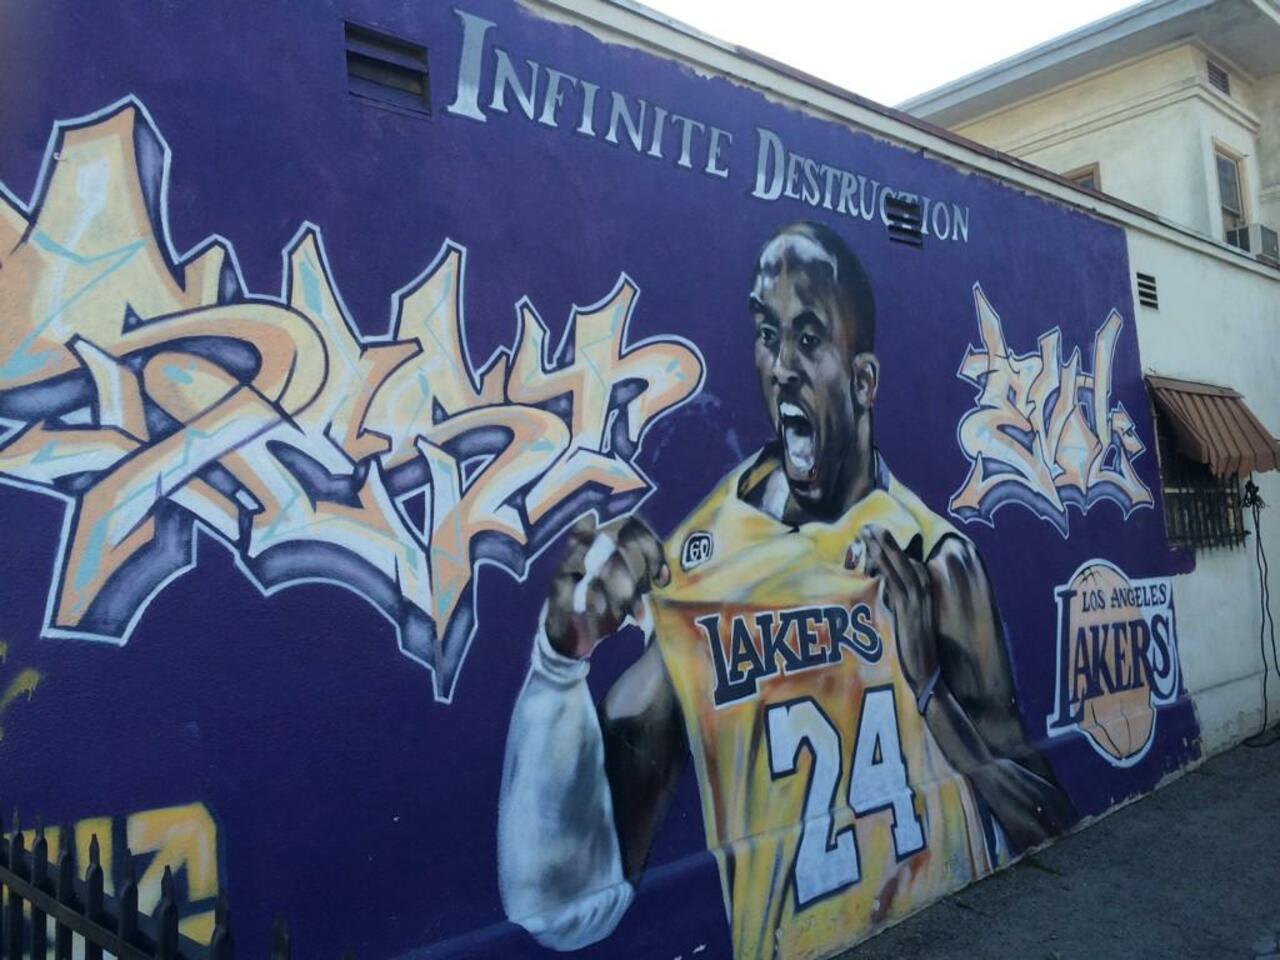 #streetart #mural #graffiti feeling cursed with injuries @Lakers @kobebryant #kb24 #blackmamba @nba 2 undergo surgery http://t.co/MHS0q3NuPA